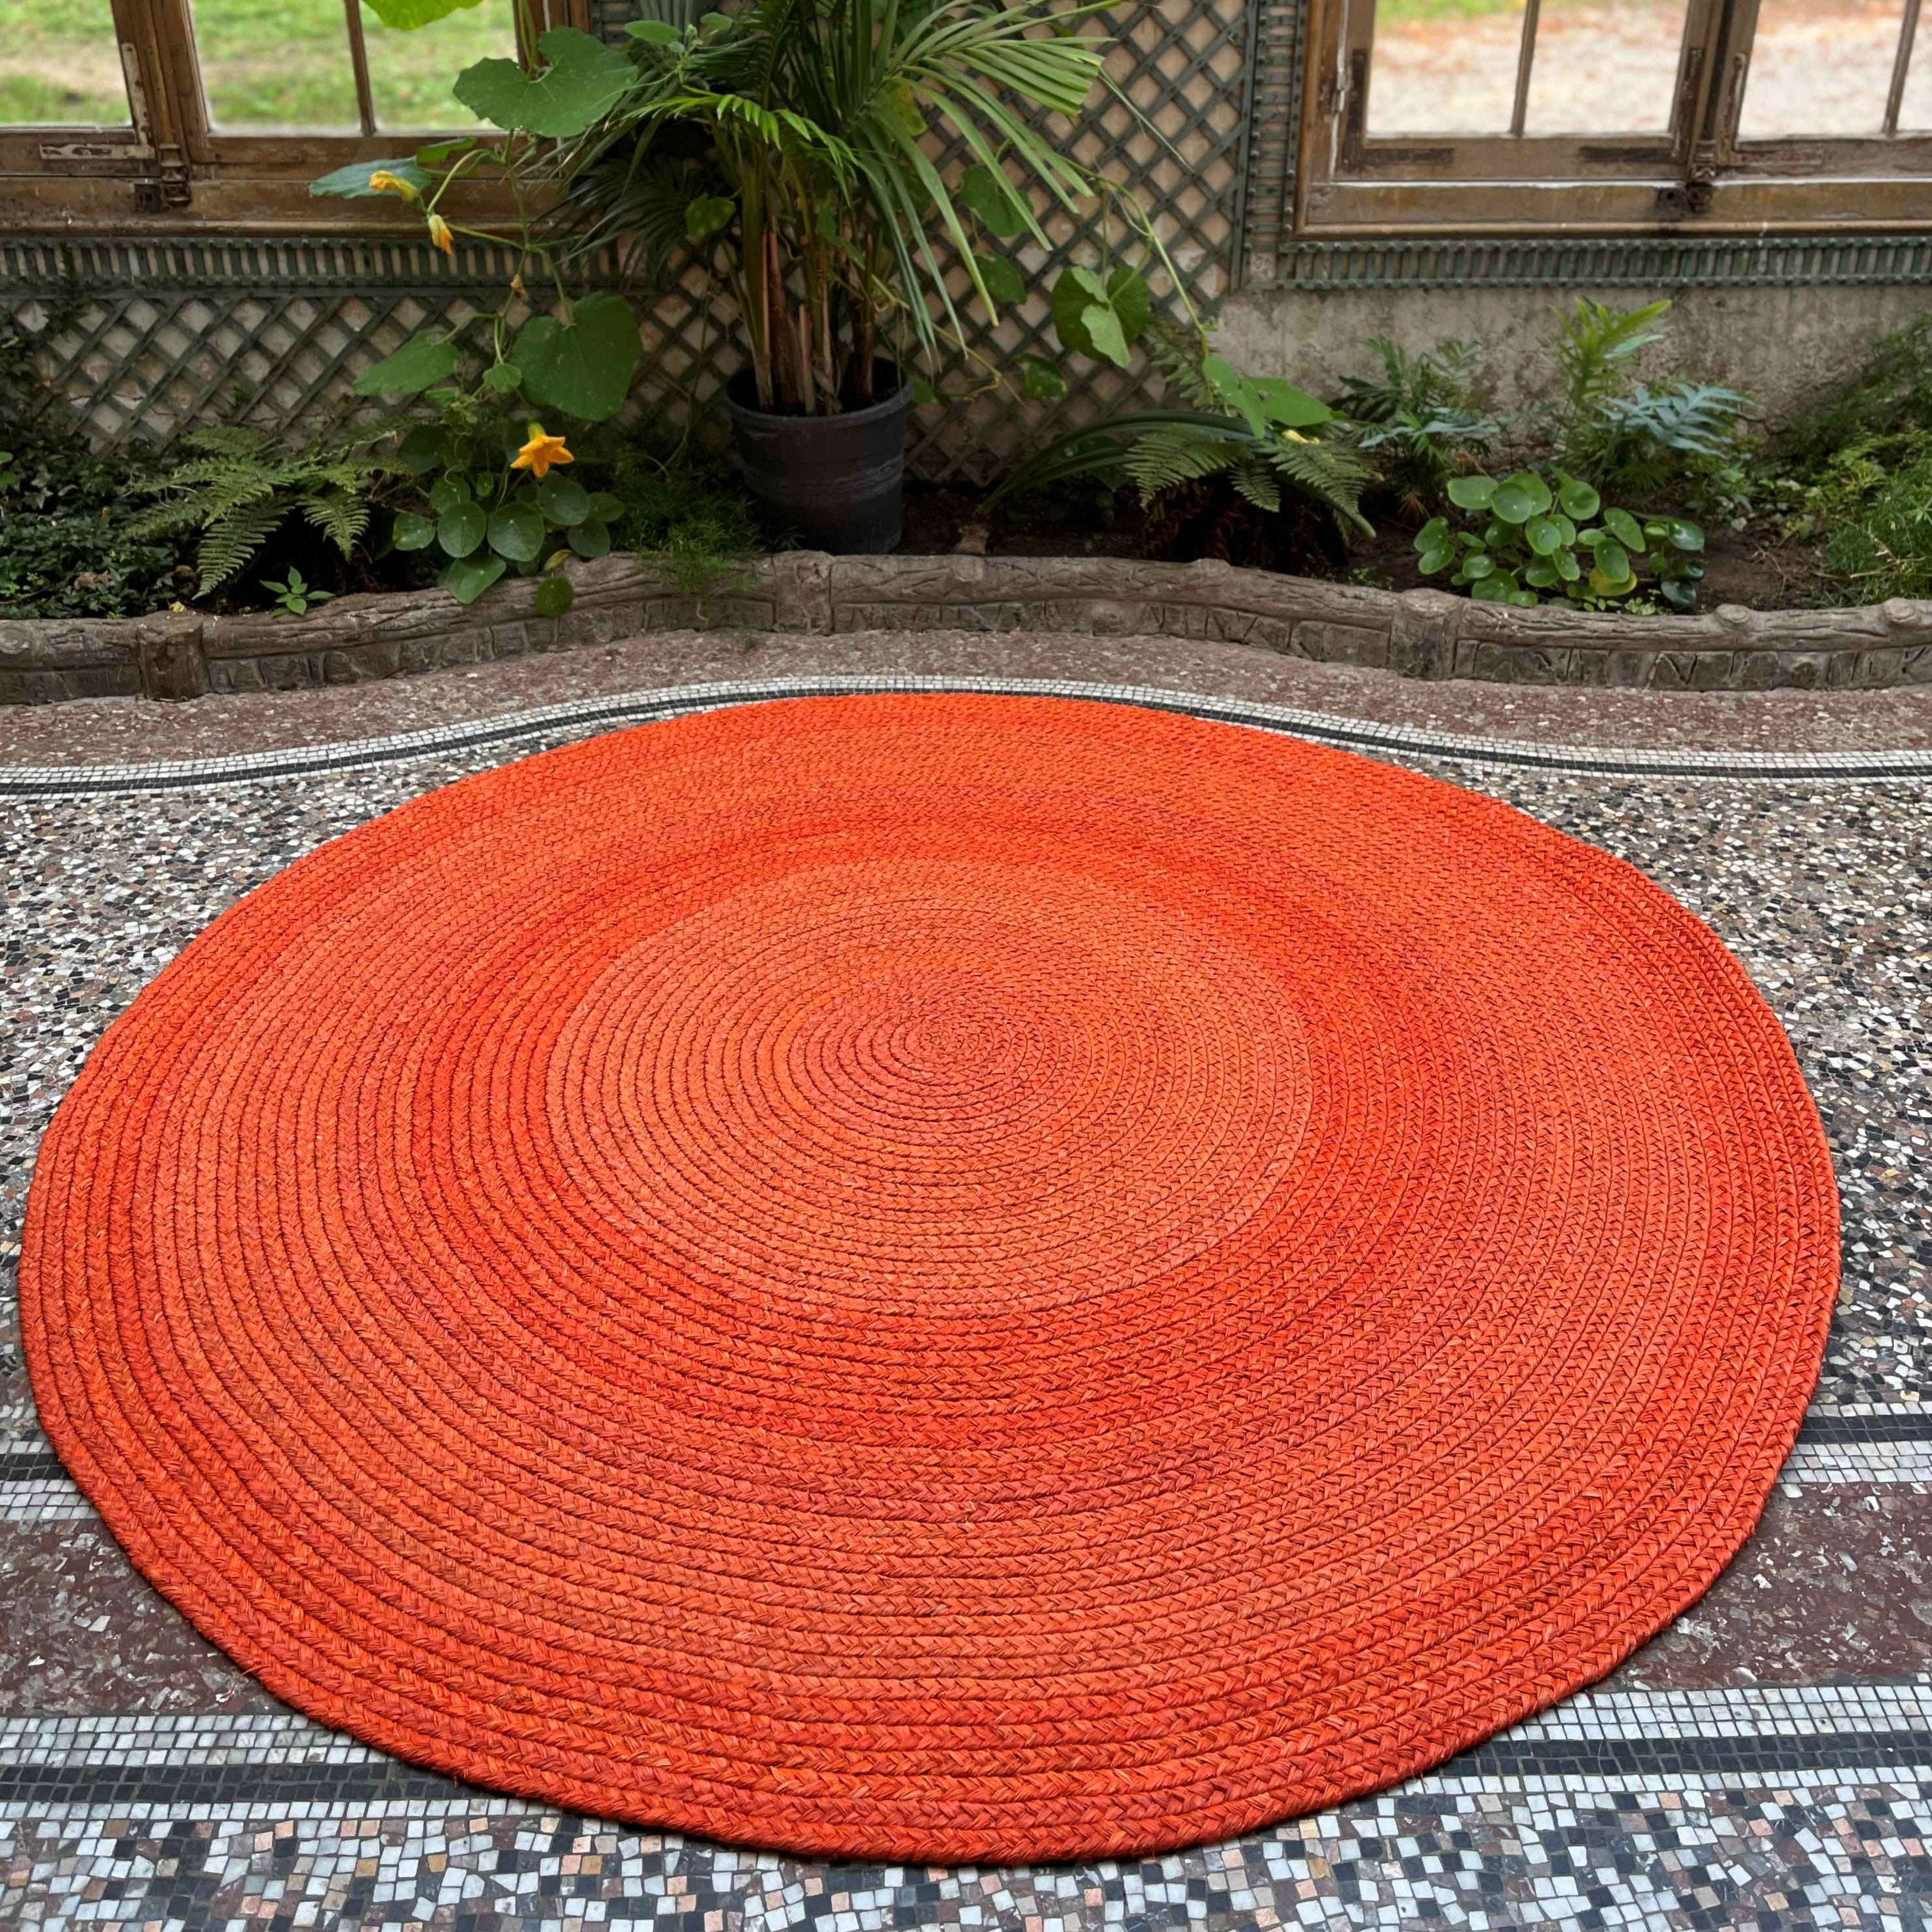 Tapis rond en raphia corail- Soazy- 190 cm Intimani Ethnique chic